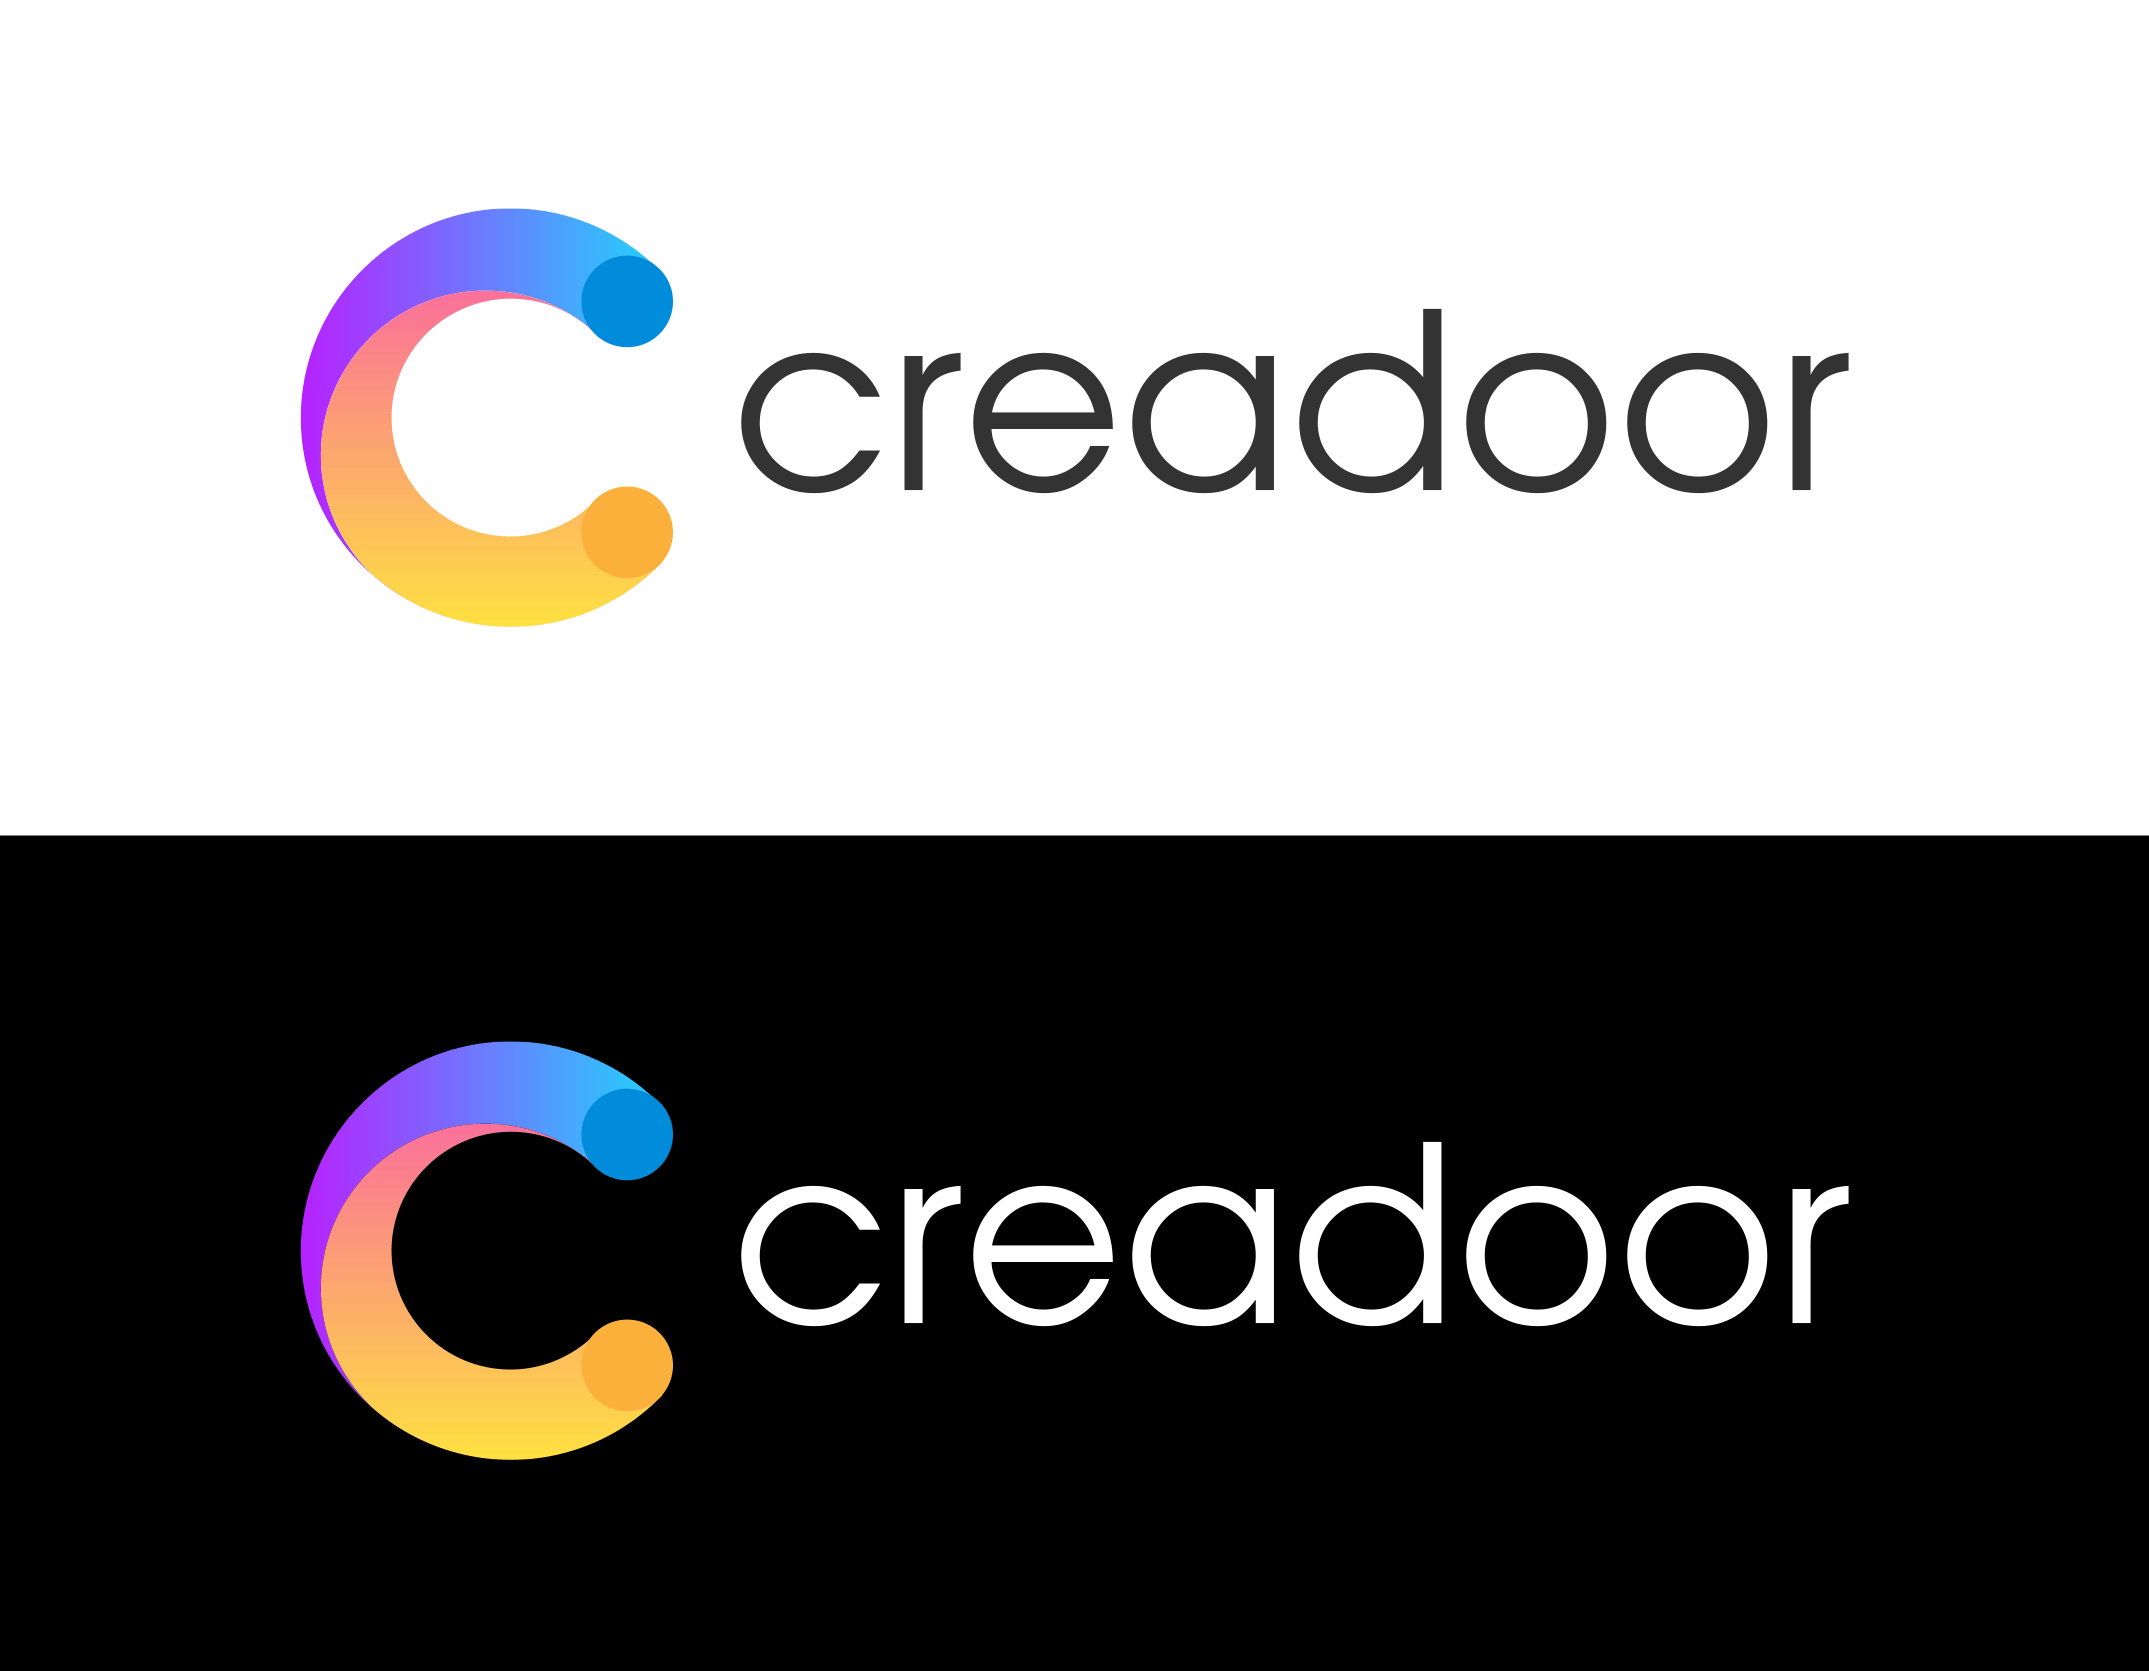 Creadoor logo